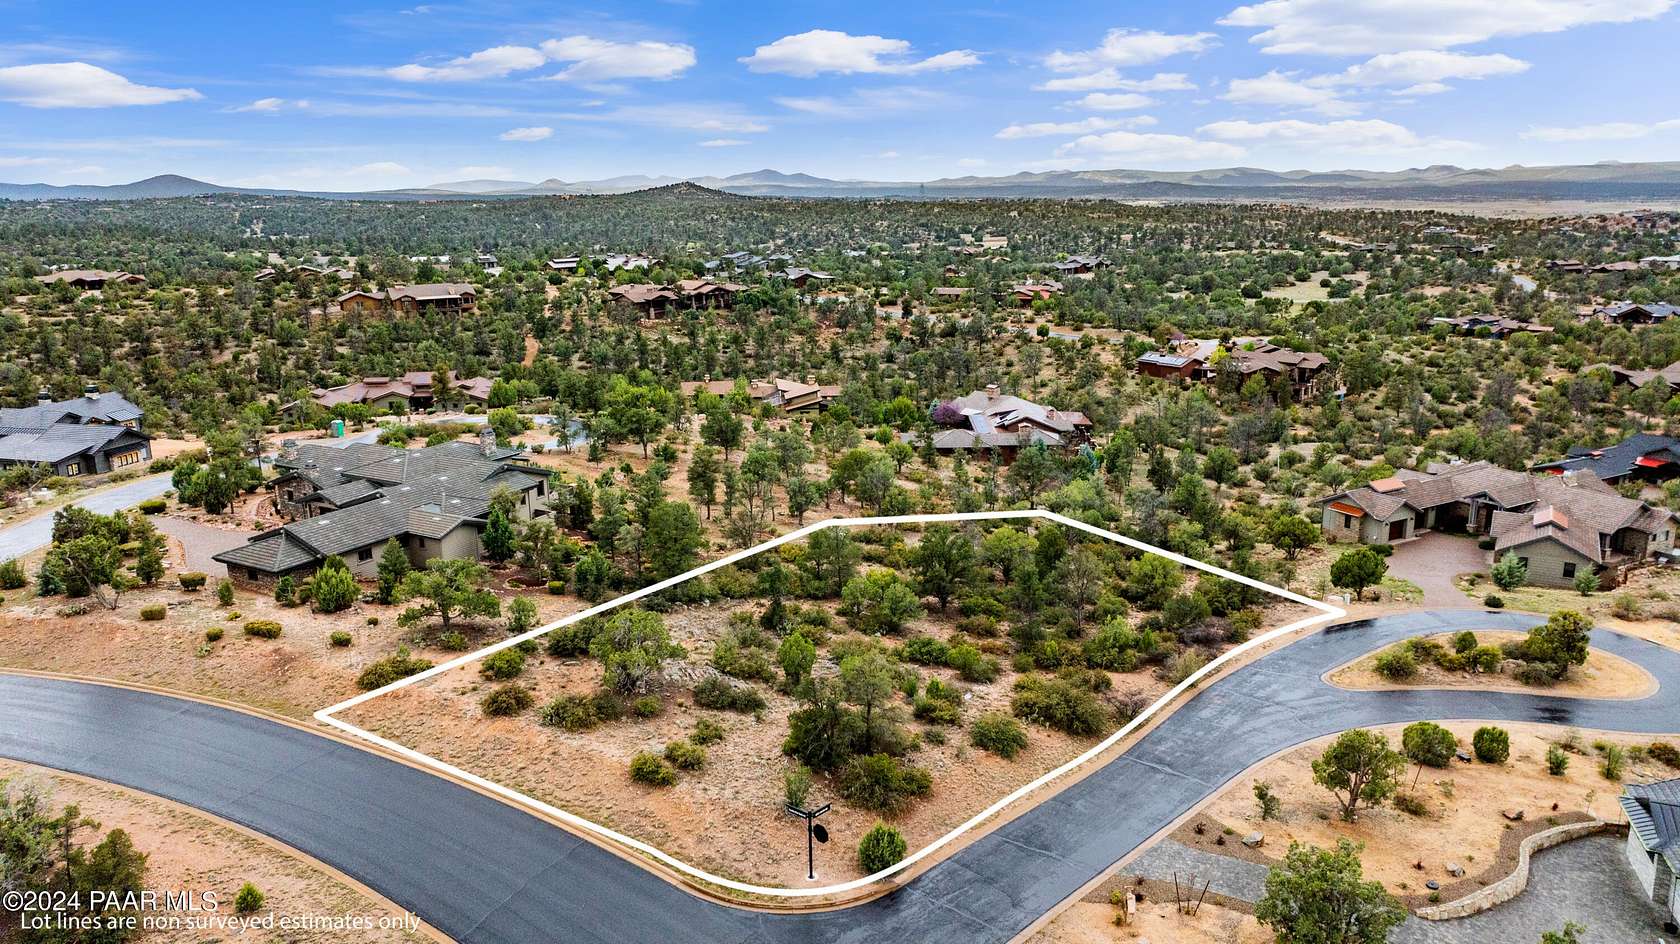 0.83 Acres of Residential Land for Sale in Prescott, Arizona